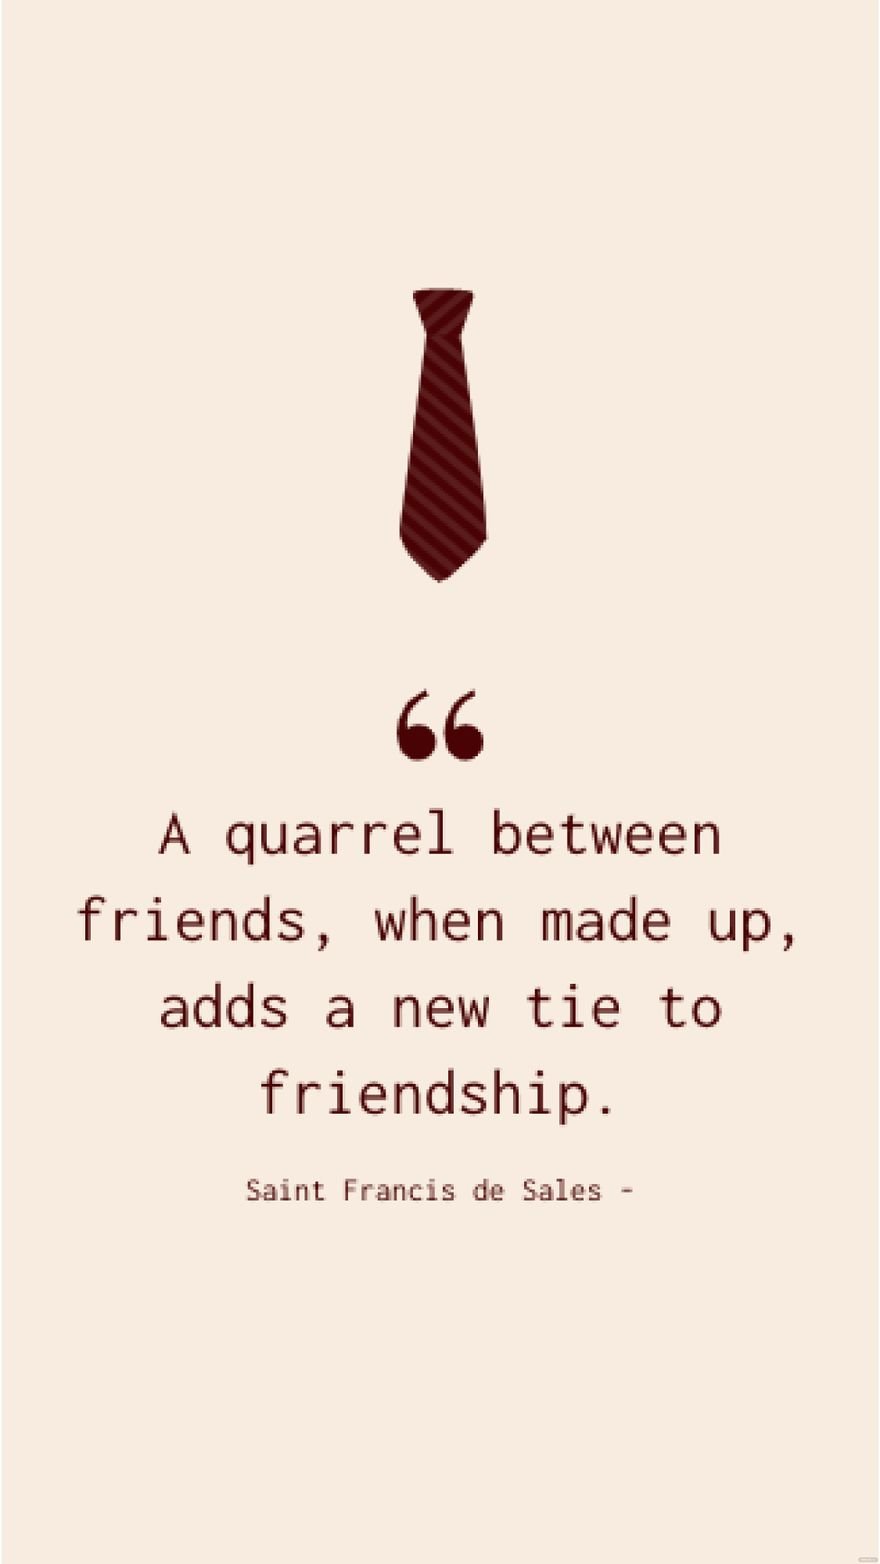 Saint Francis de Sales - A quarrel between friends, when made up, adds a new tie to friendship.